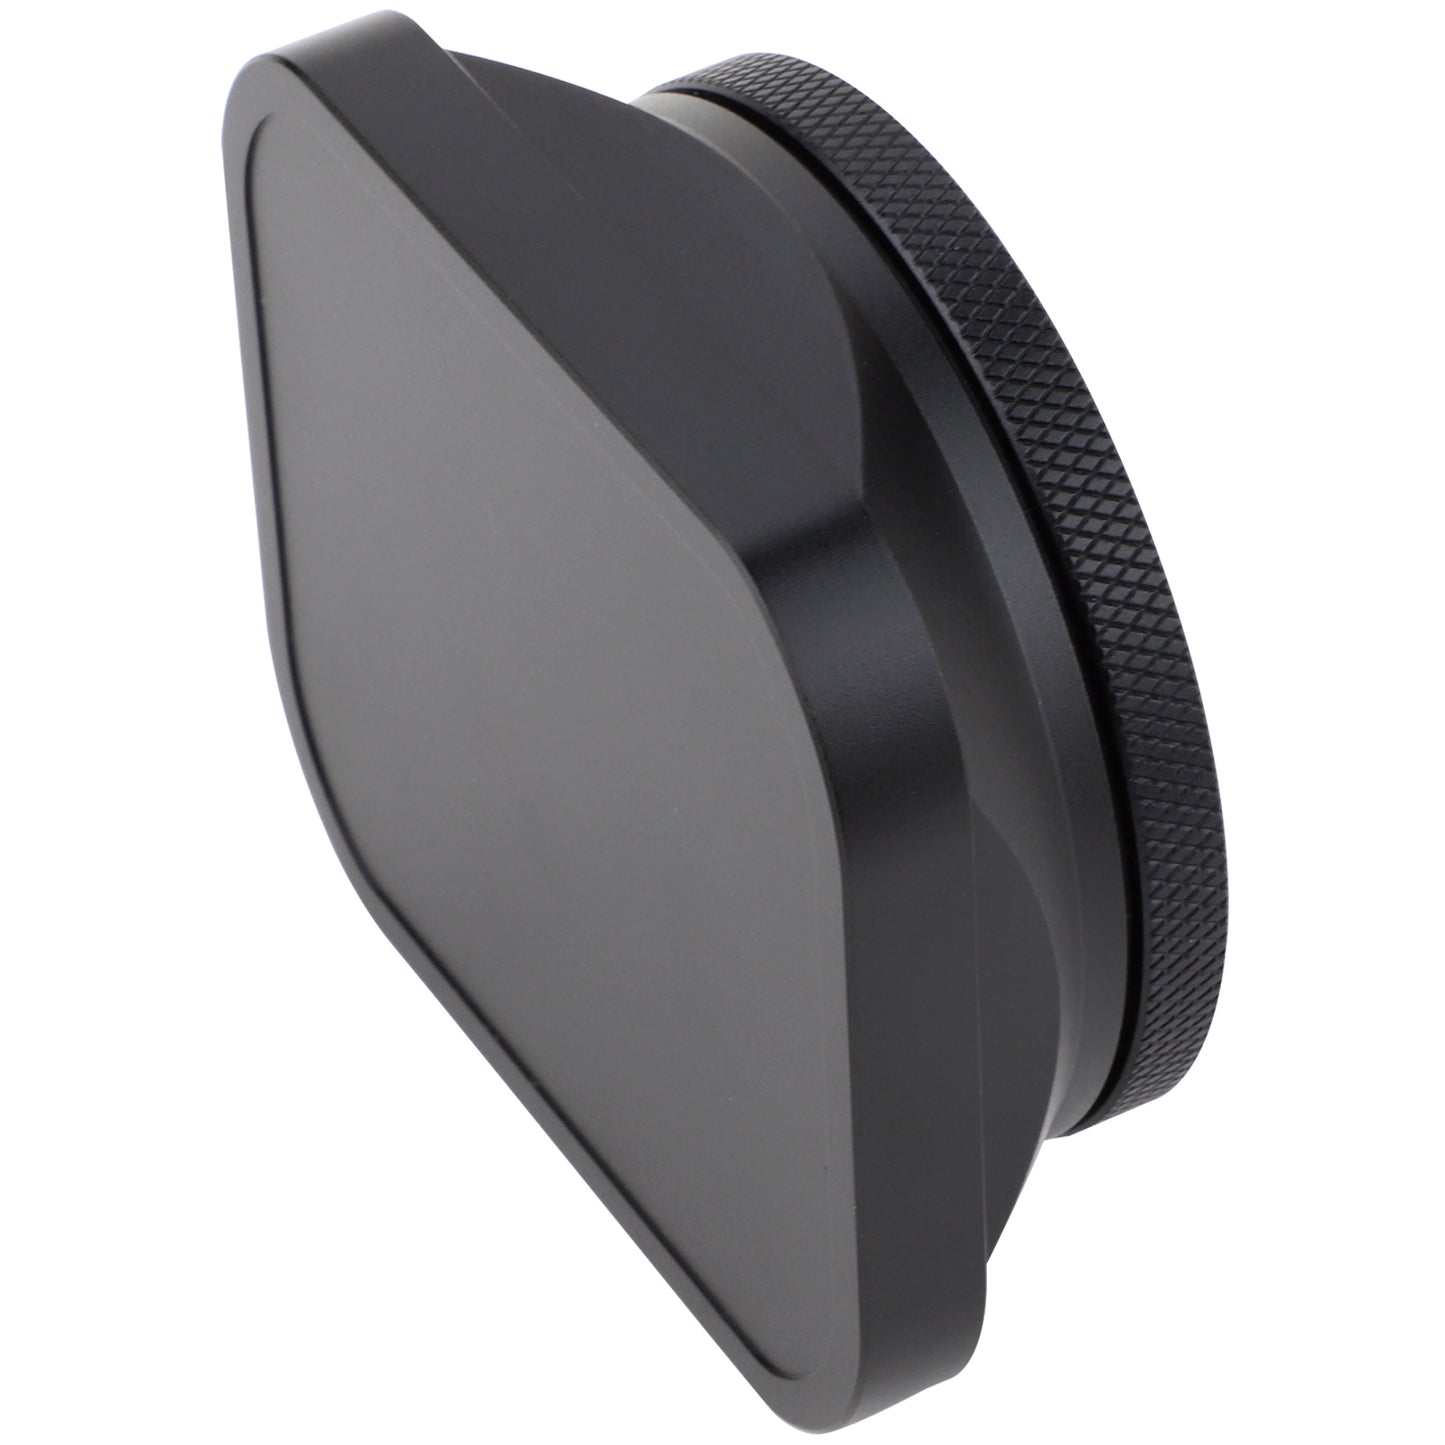 Haoge LH-X200B Square Metal Lens Hood with 49mm Adapter Ring for Fujifilm X100VI Fuji X100V X100F X100T X100S X100 X70 Fuji Photo Camera Accessories Black